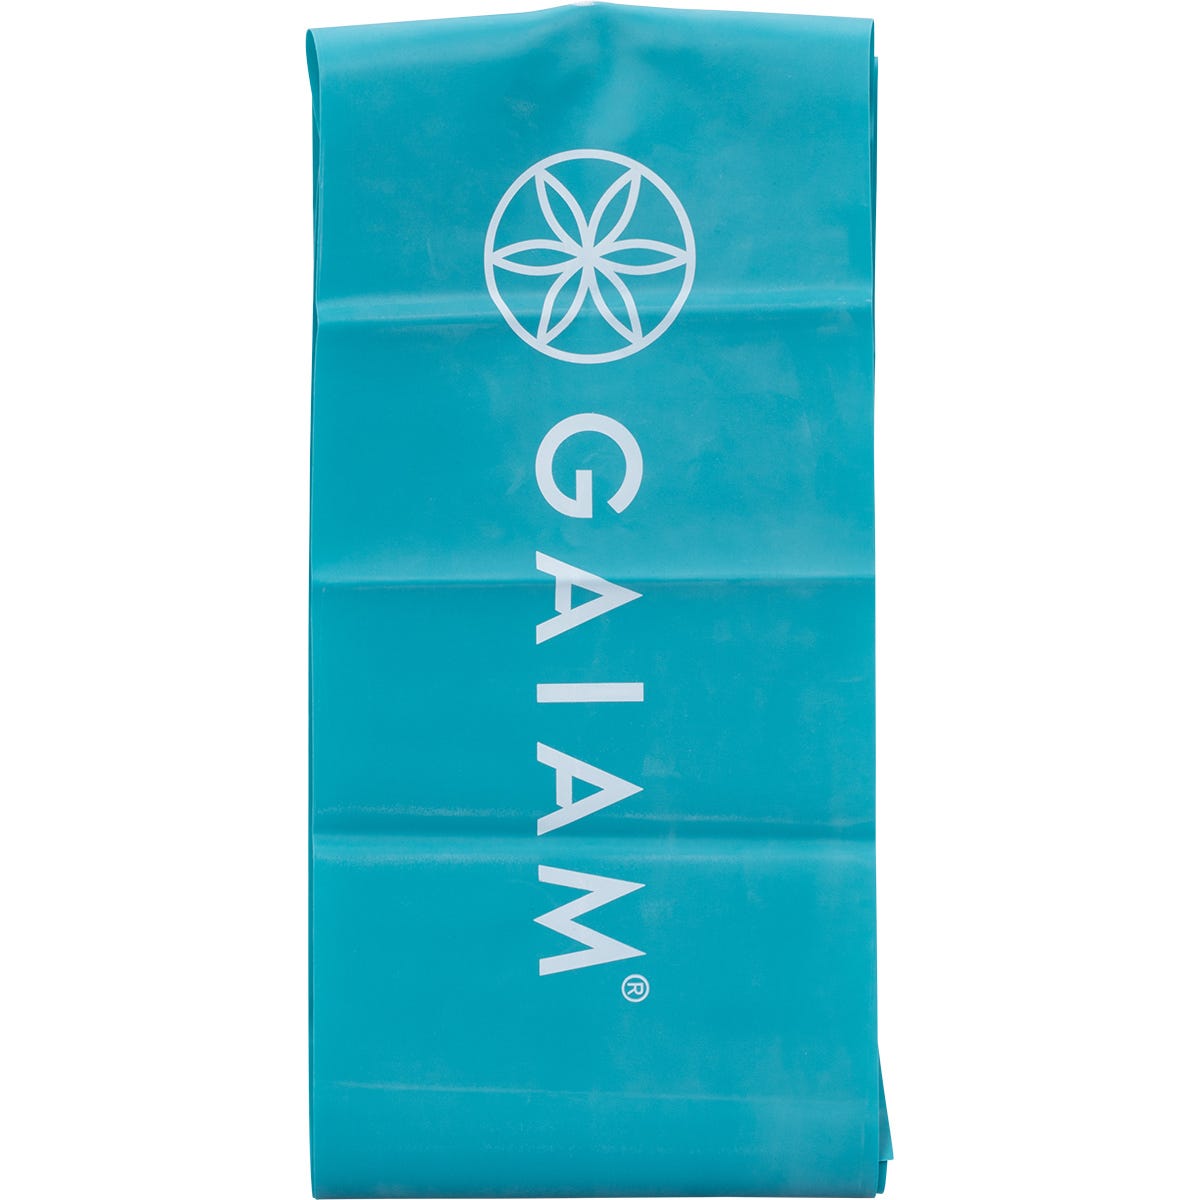 Gaiam Treat Your Feet Kit